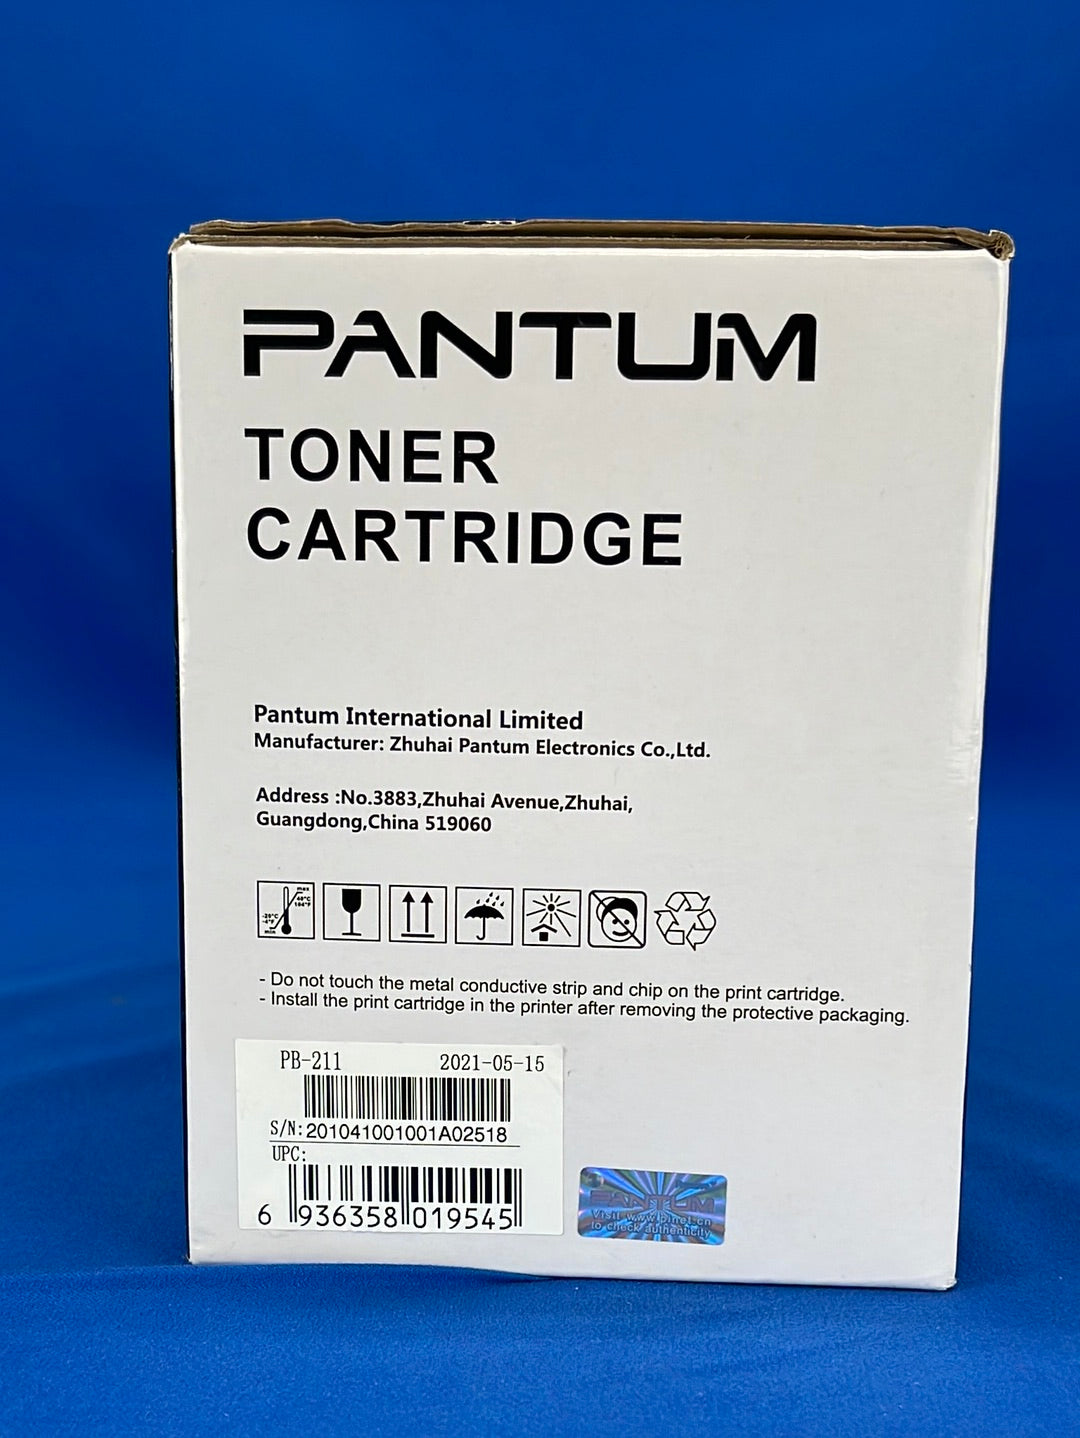 Pantum PB-211 PB-211EV Genuine Toner Cartridge Fit for Pantum P2502W M6552NW M6602NW P2500W M6550NW M6600NW Printer PB211 PB211EV Black Toner